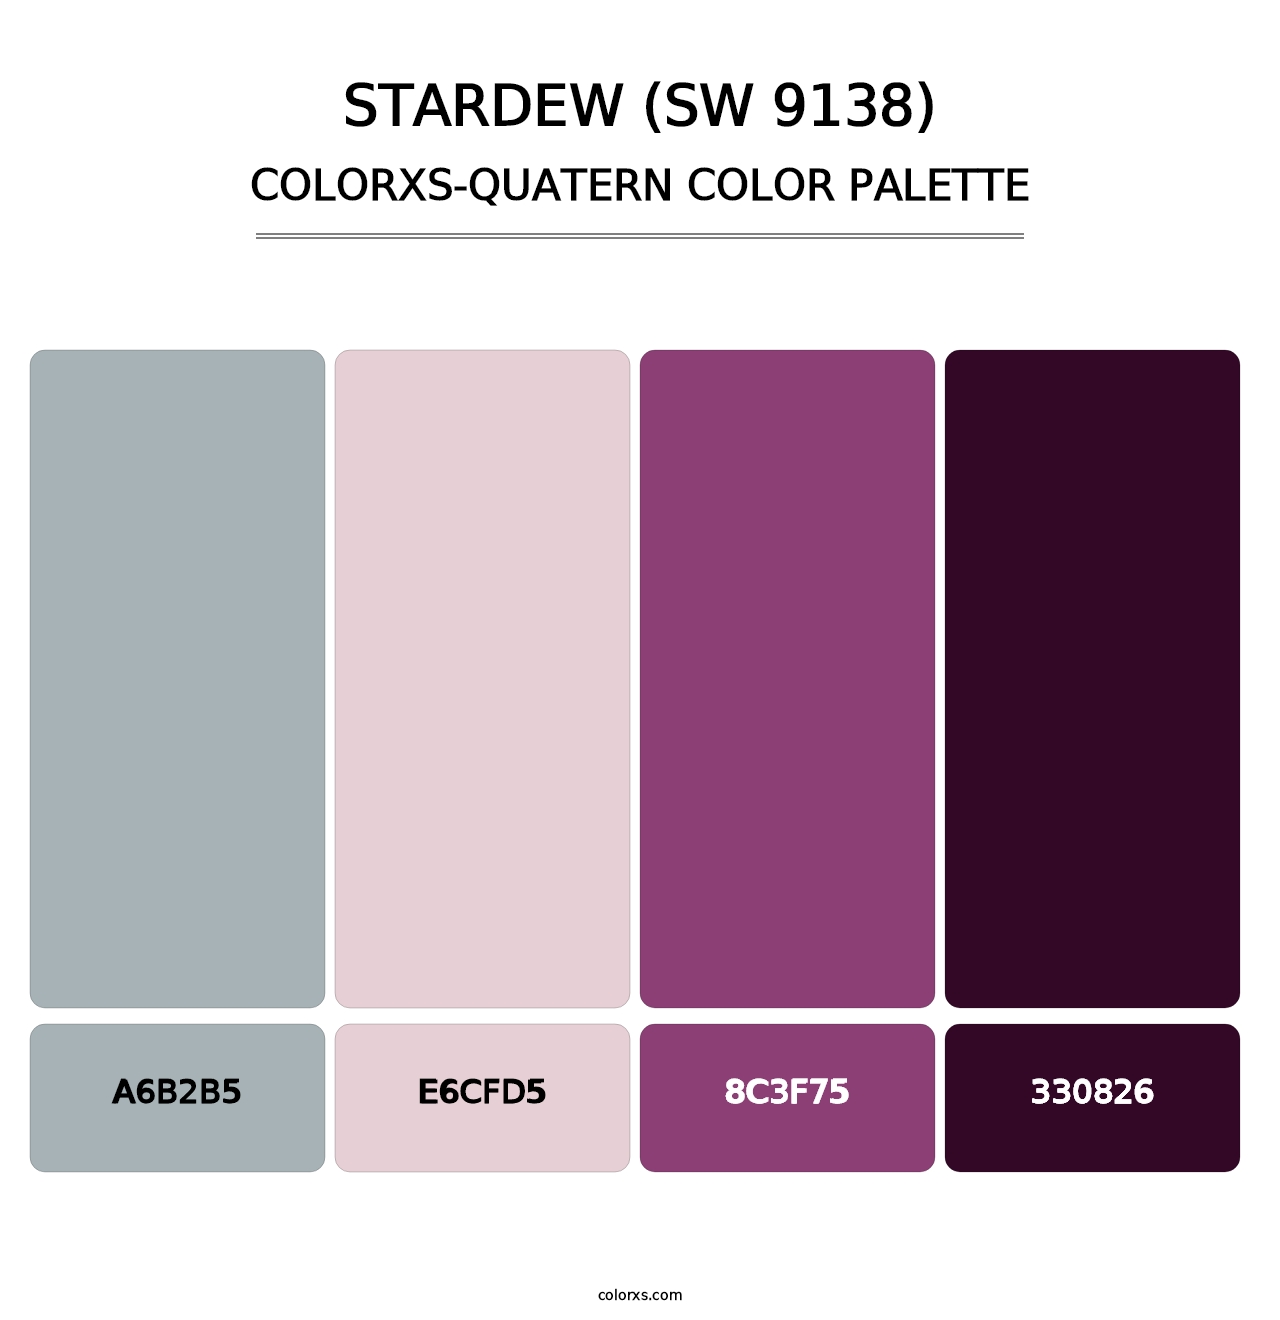 Stardew (SW 9138) - Colorxs Quatern Palette